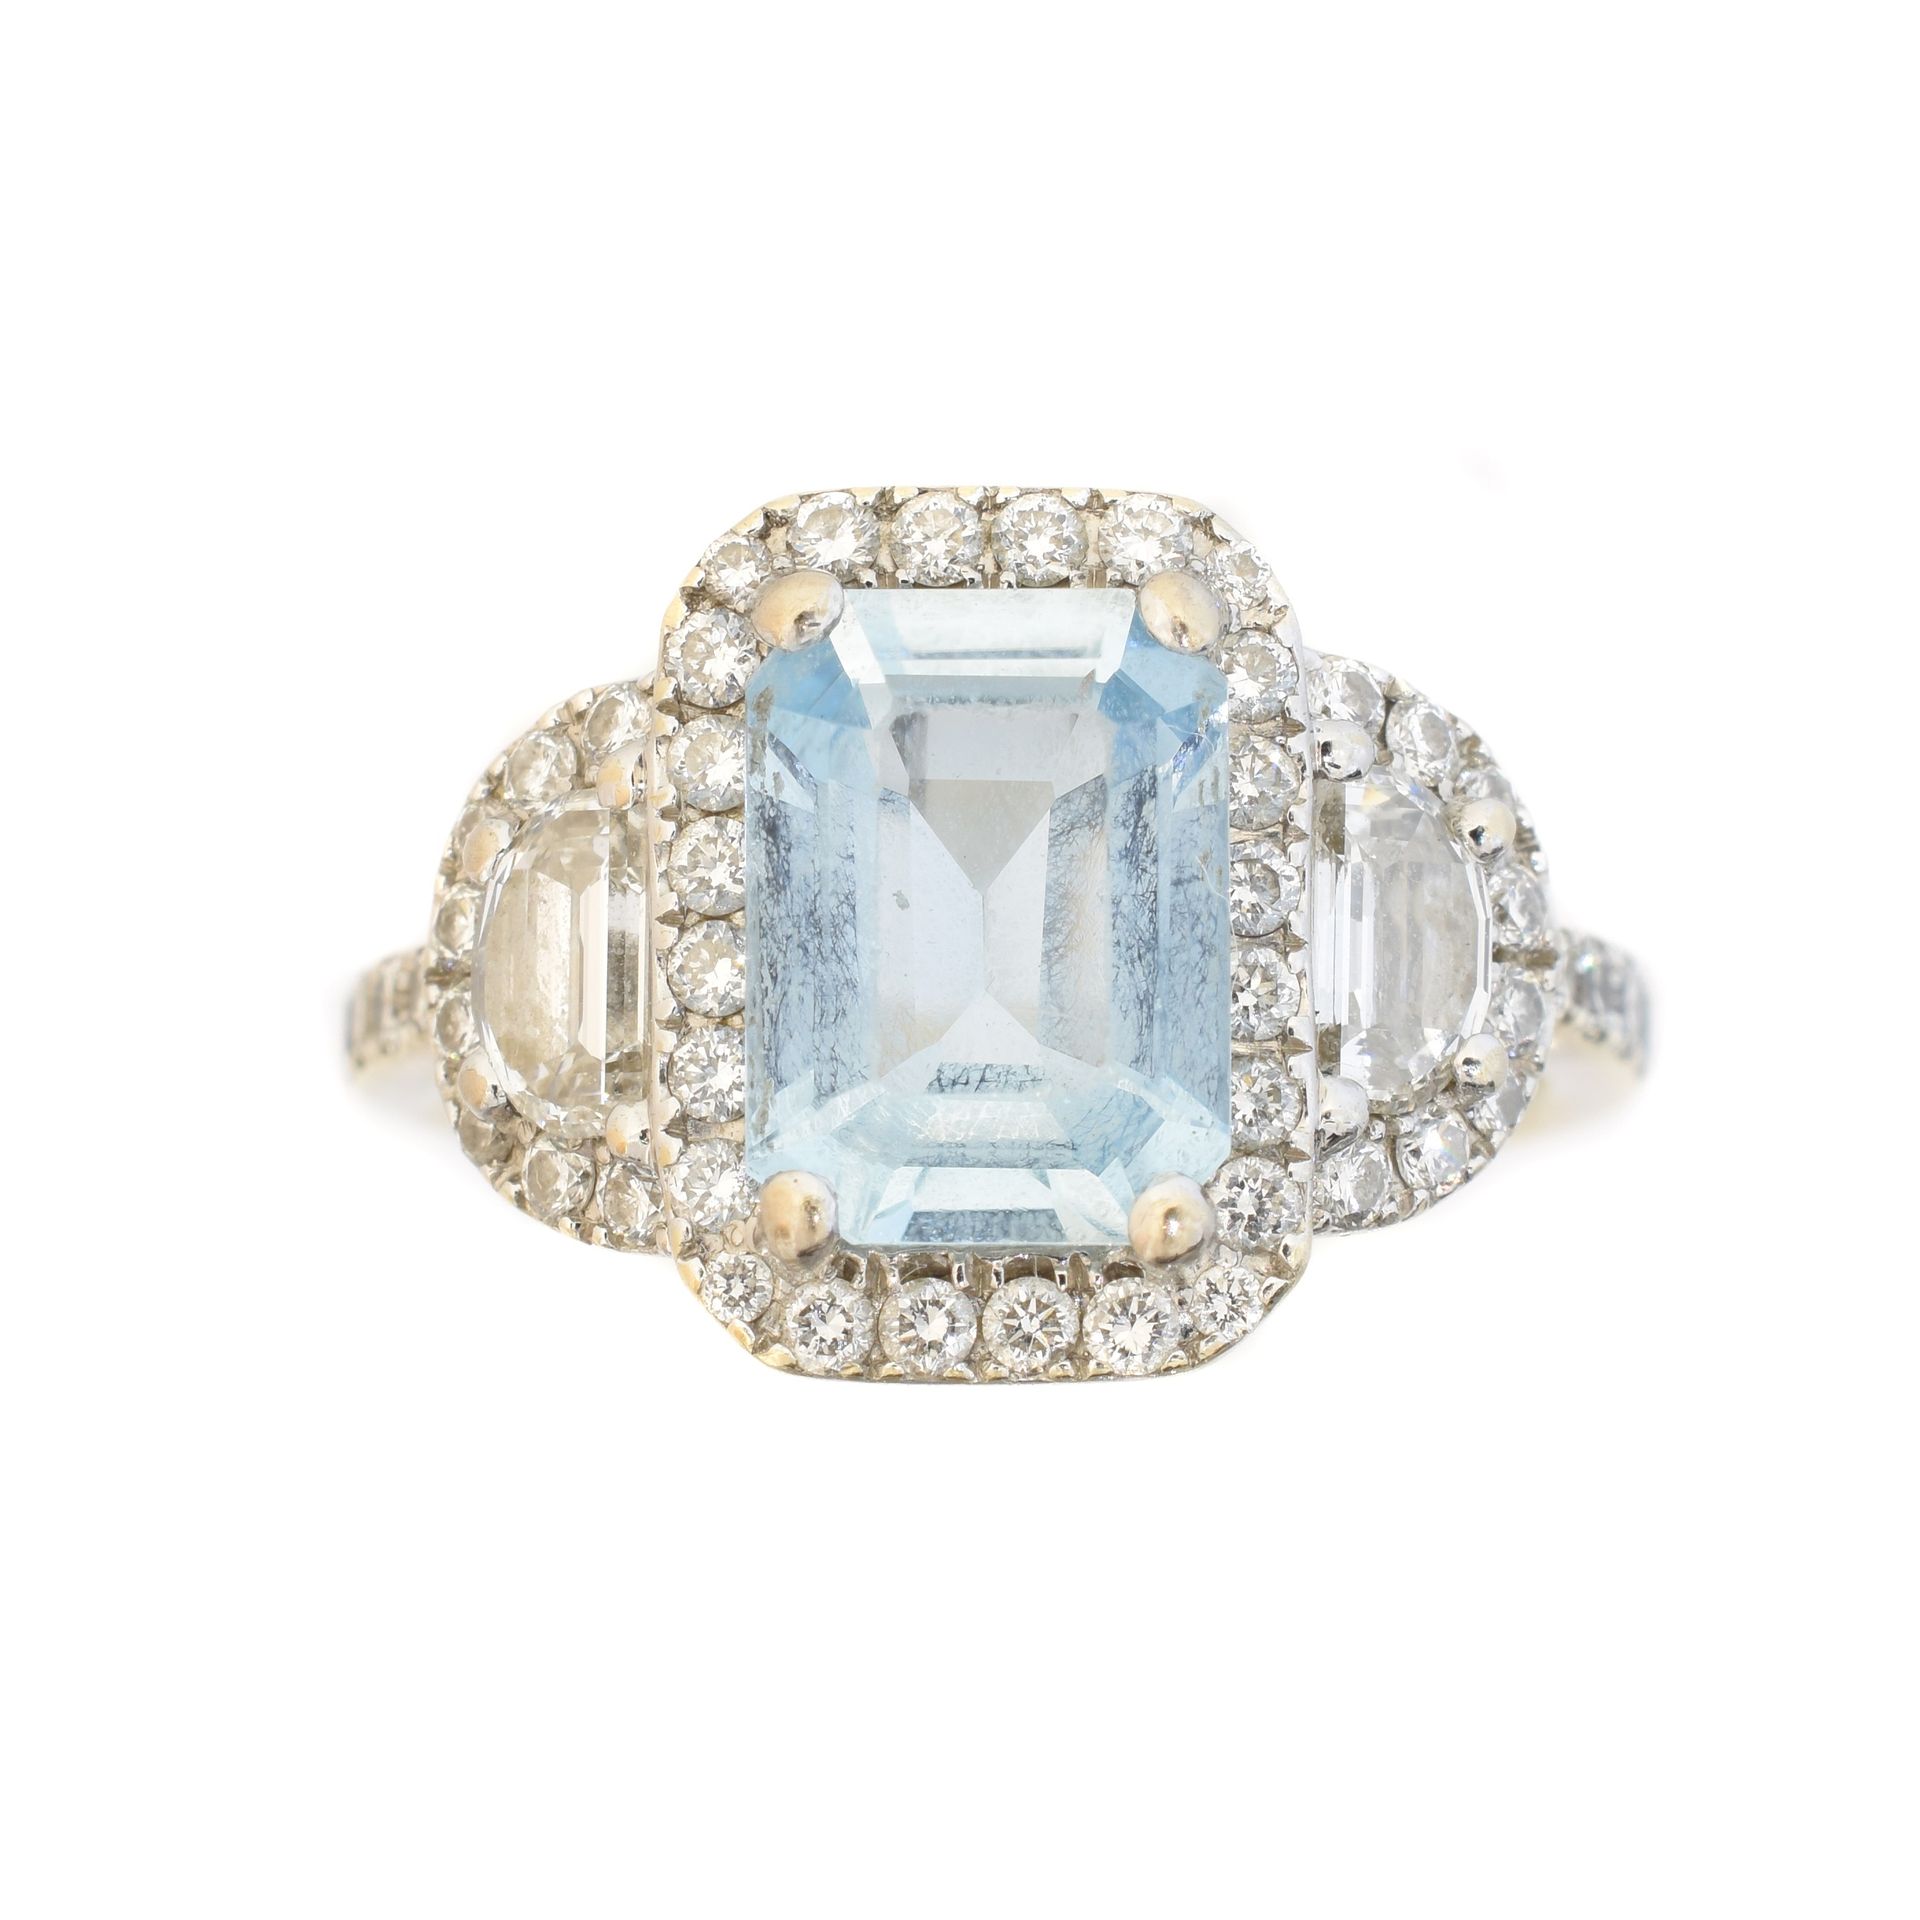 An aquamarine and diamond cluster ring, 
Anillo de aguamarina y diamantes, la ag&hellip;